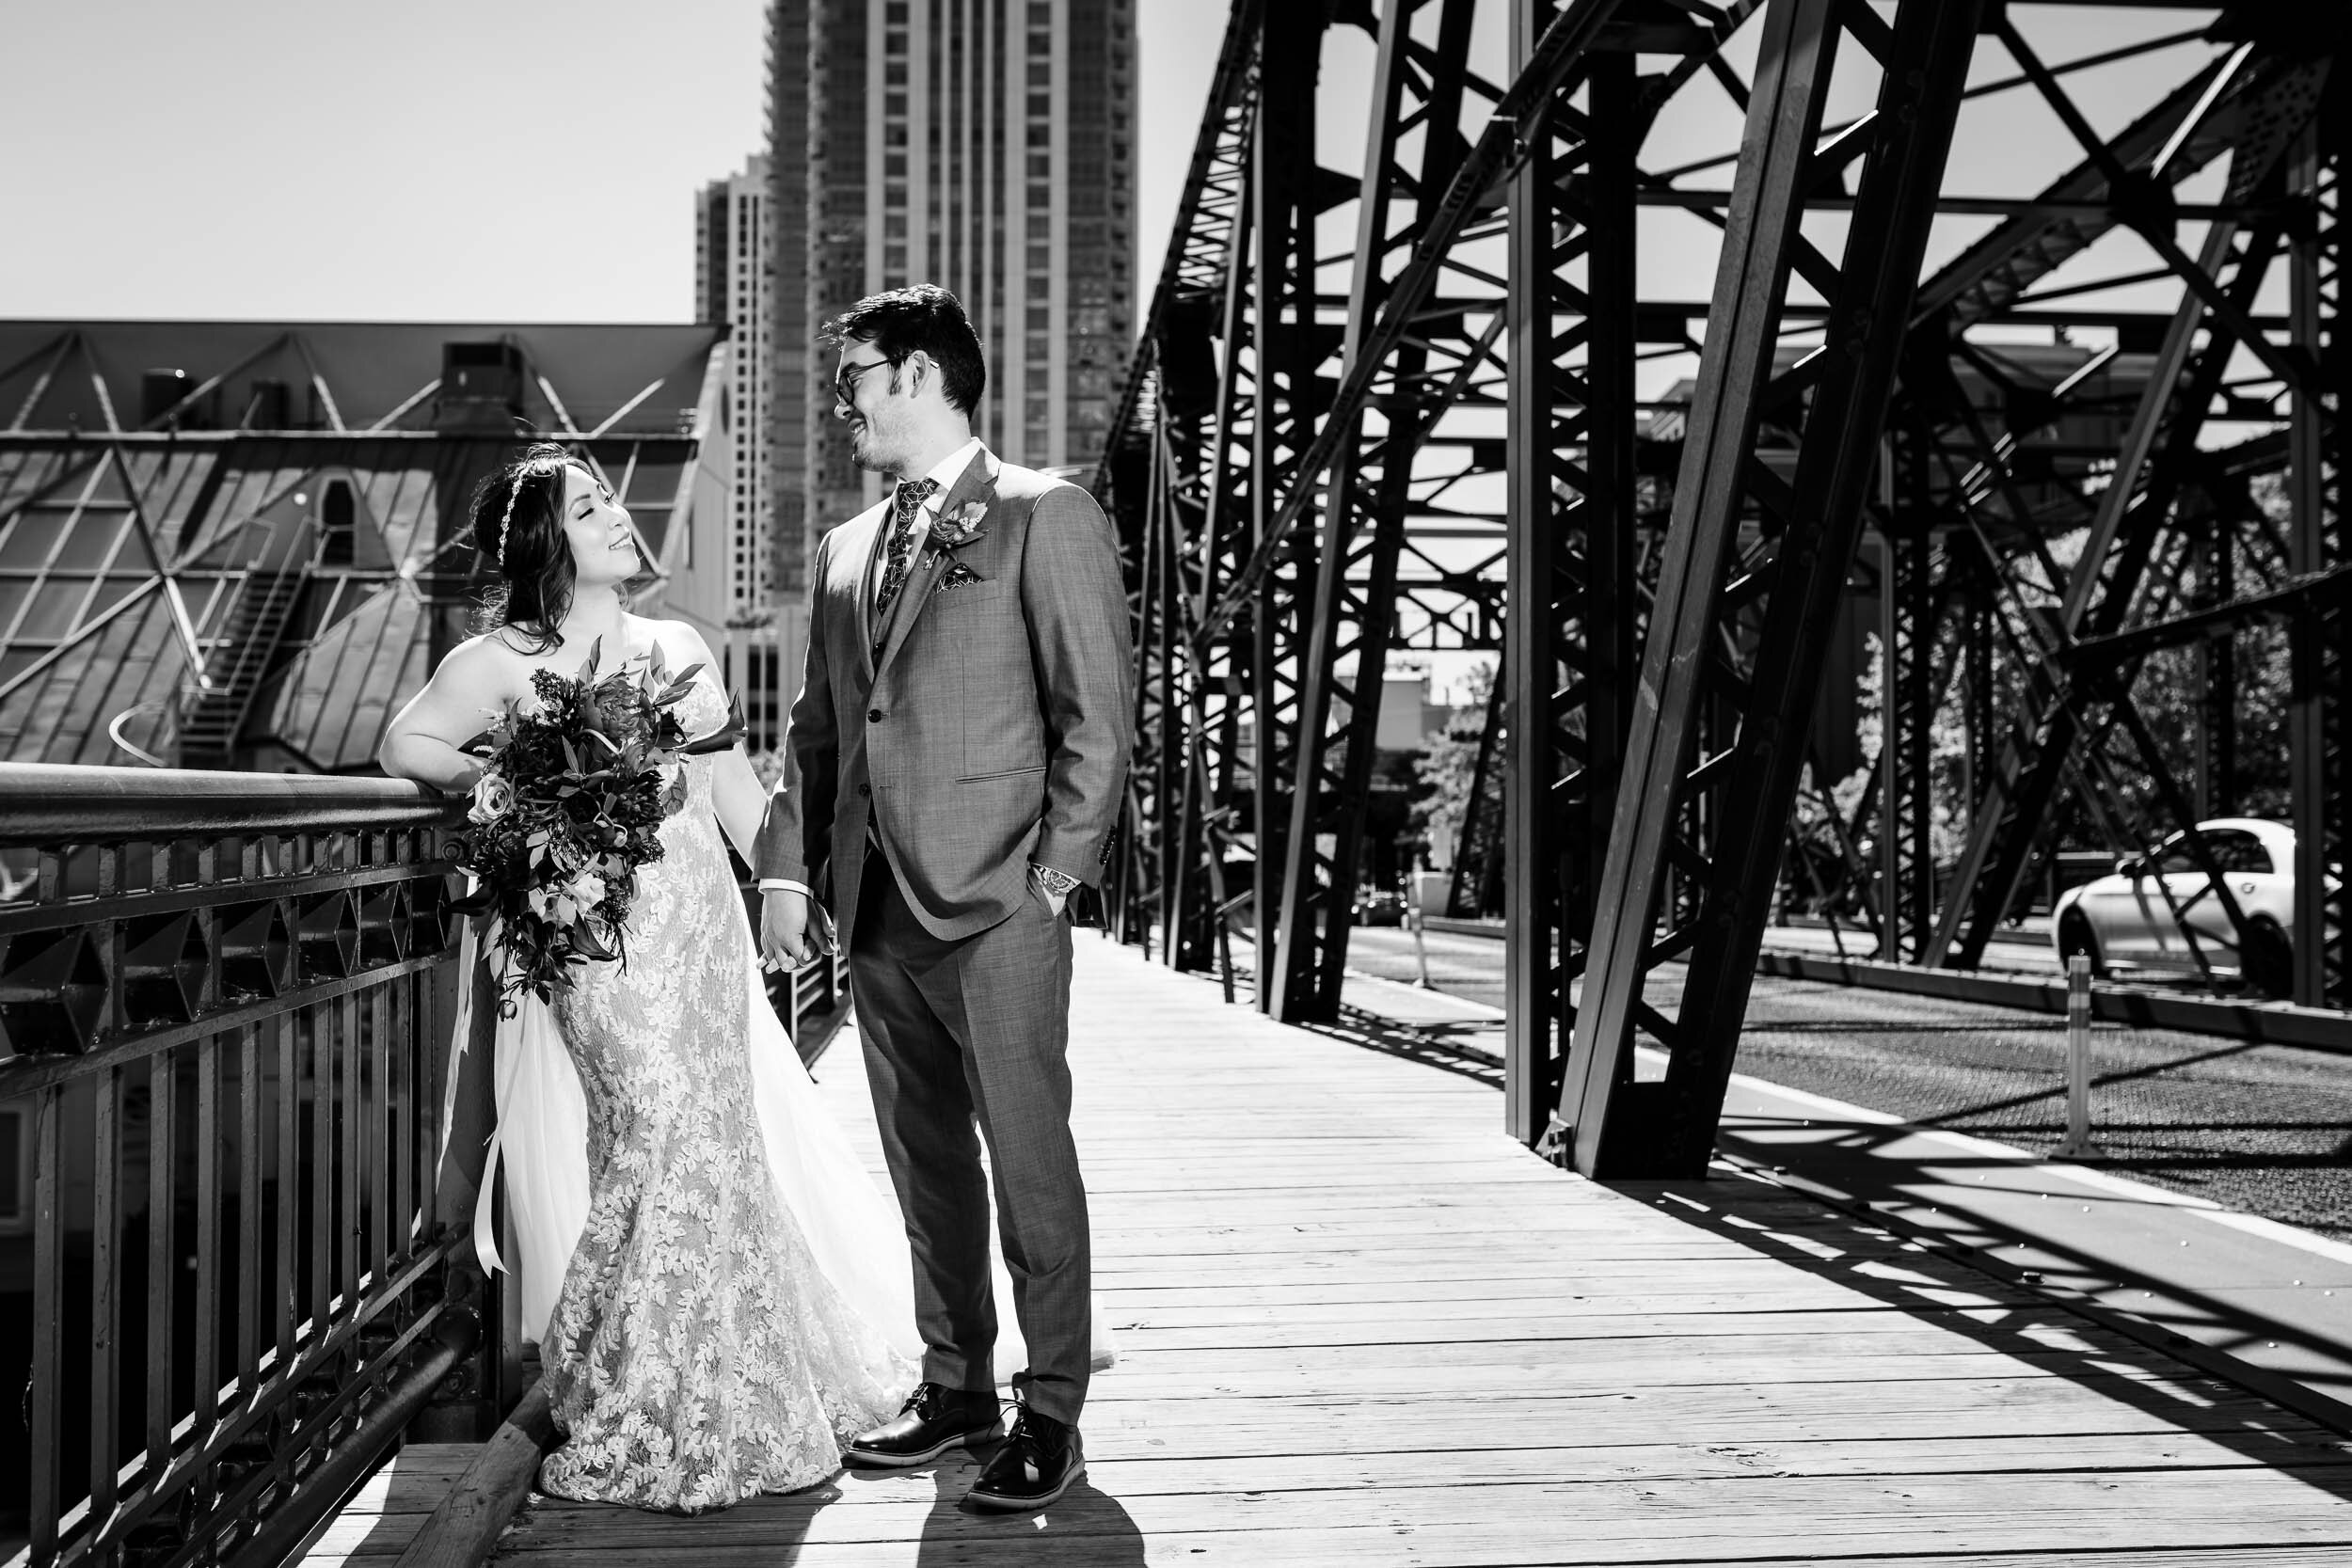 Chicago Wedding Photographer | Kinzie Street Bridge | J. Brown Photography | creative wedding portraits.